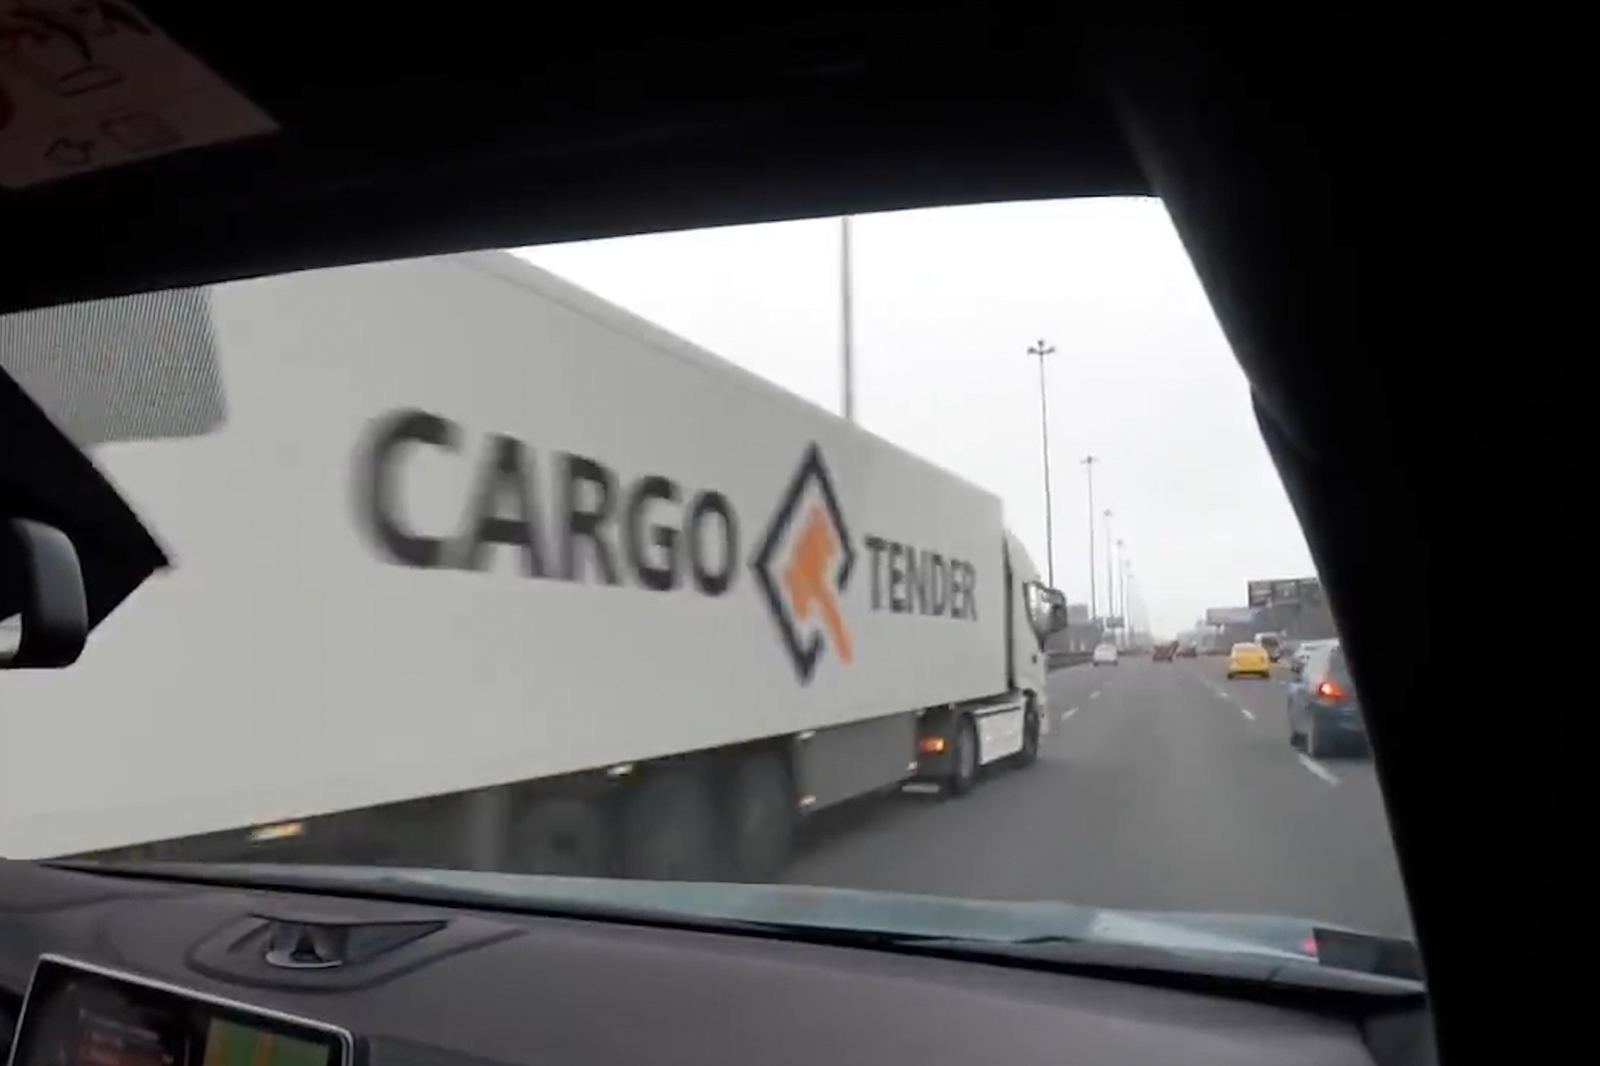 Cargotenders Viral Video